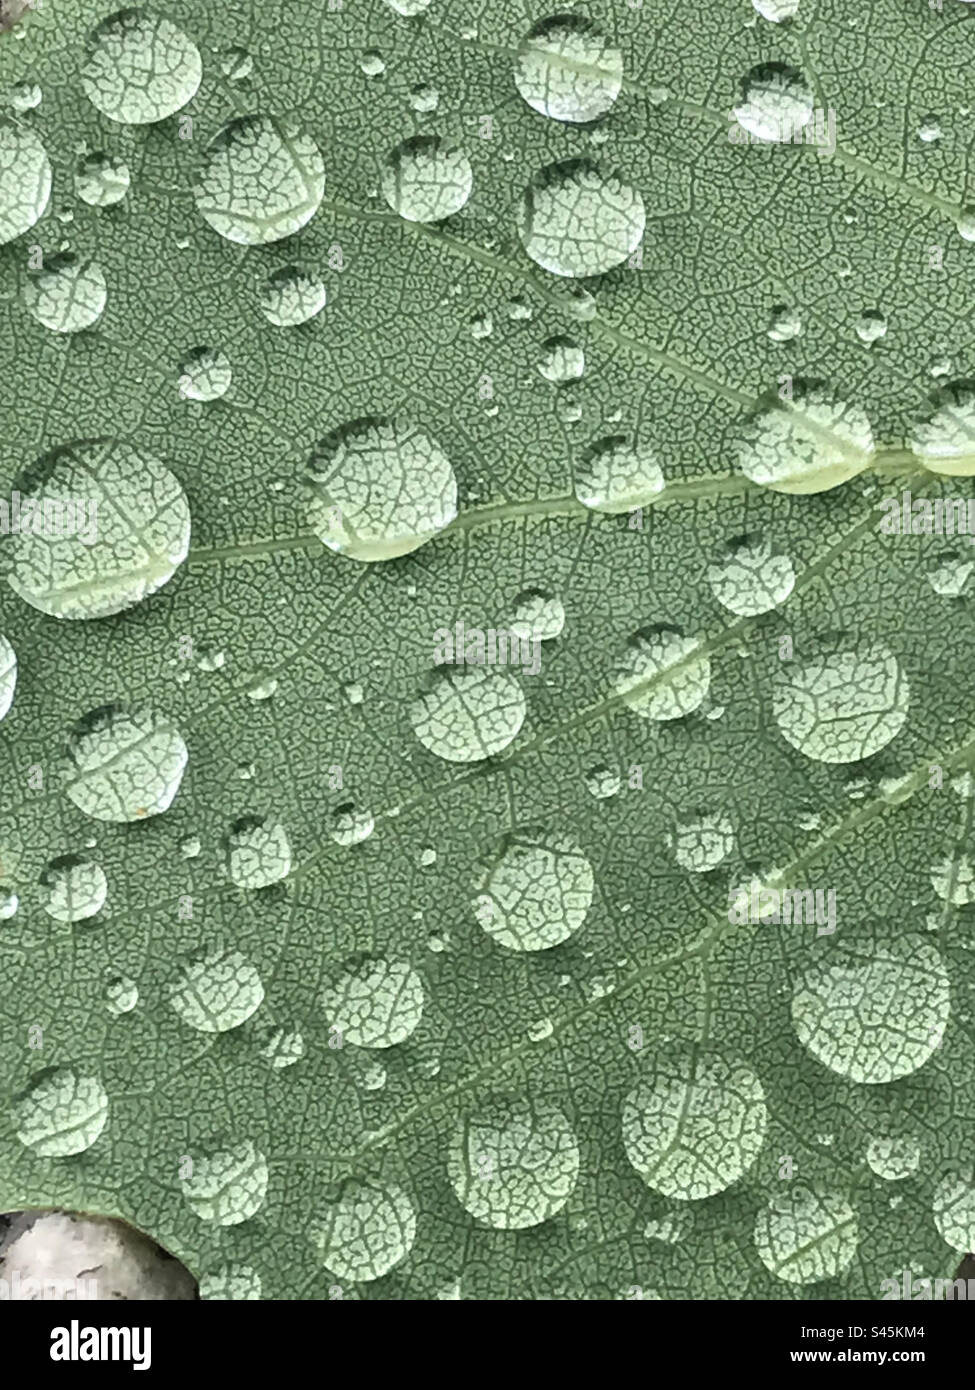 Gotas de agua en hojas verdes frescas Foto de stock